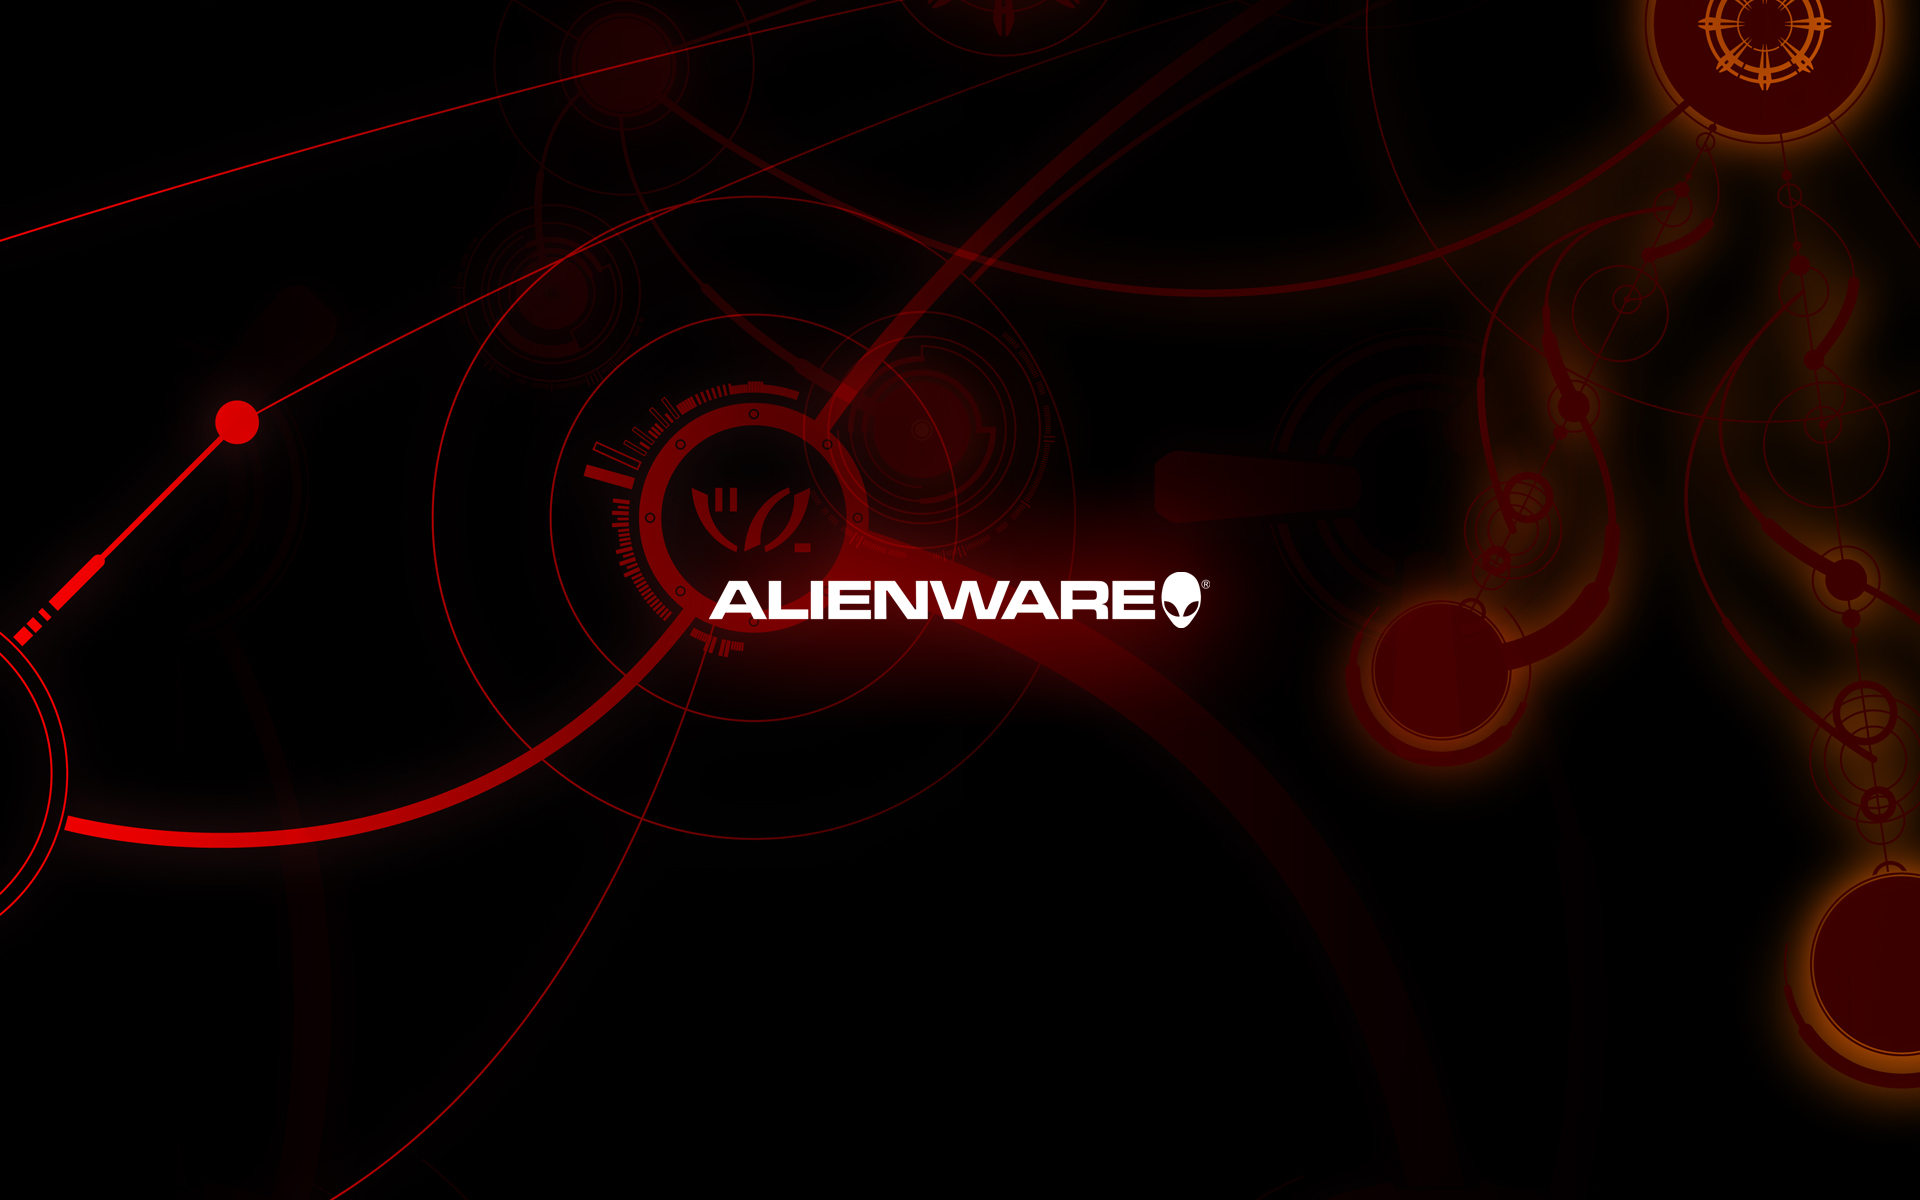 Alienware Wallpaper Hd